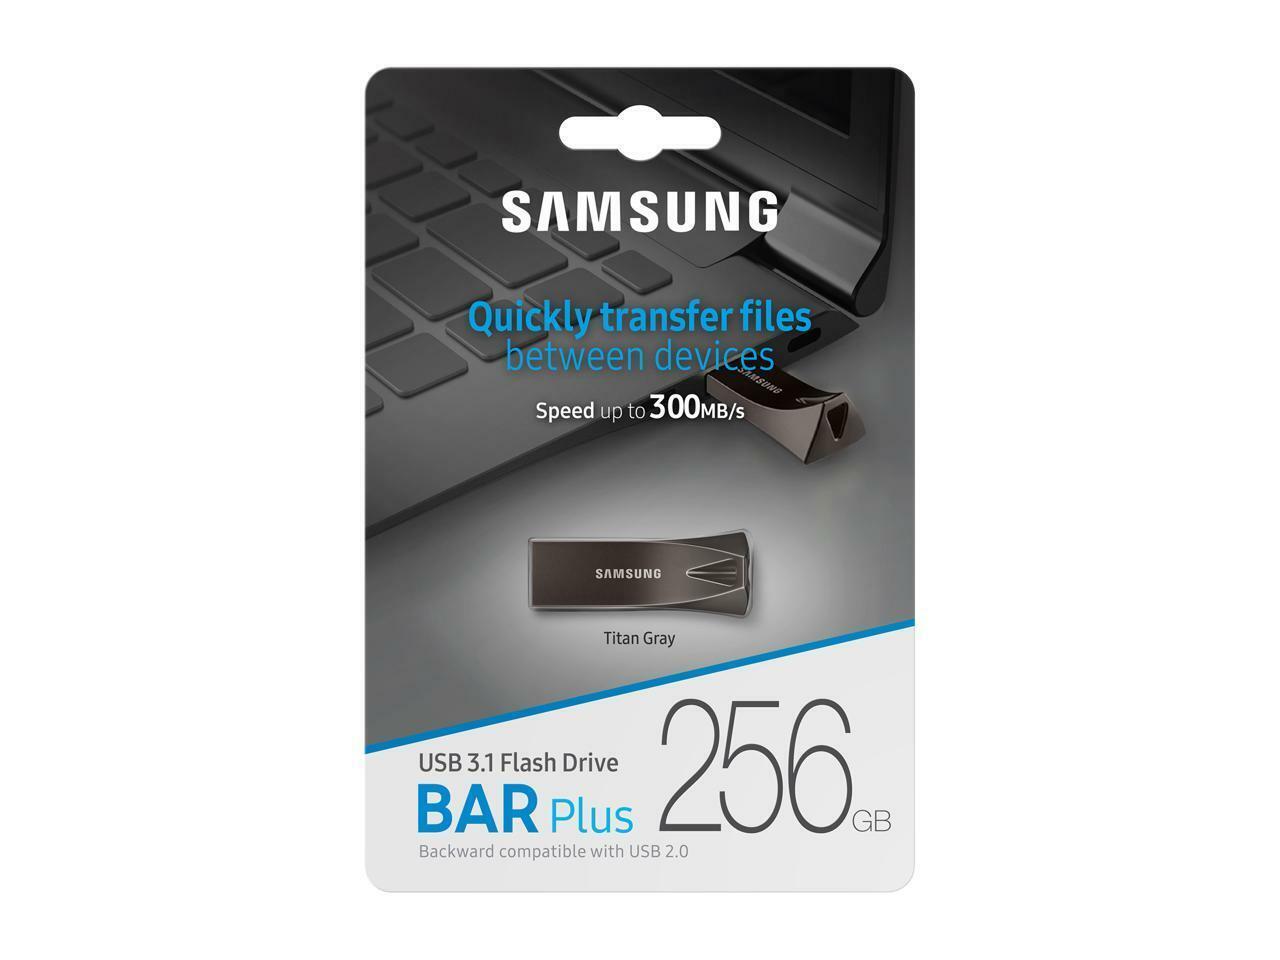 Samsung Bar Plus 64